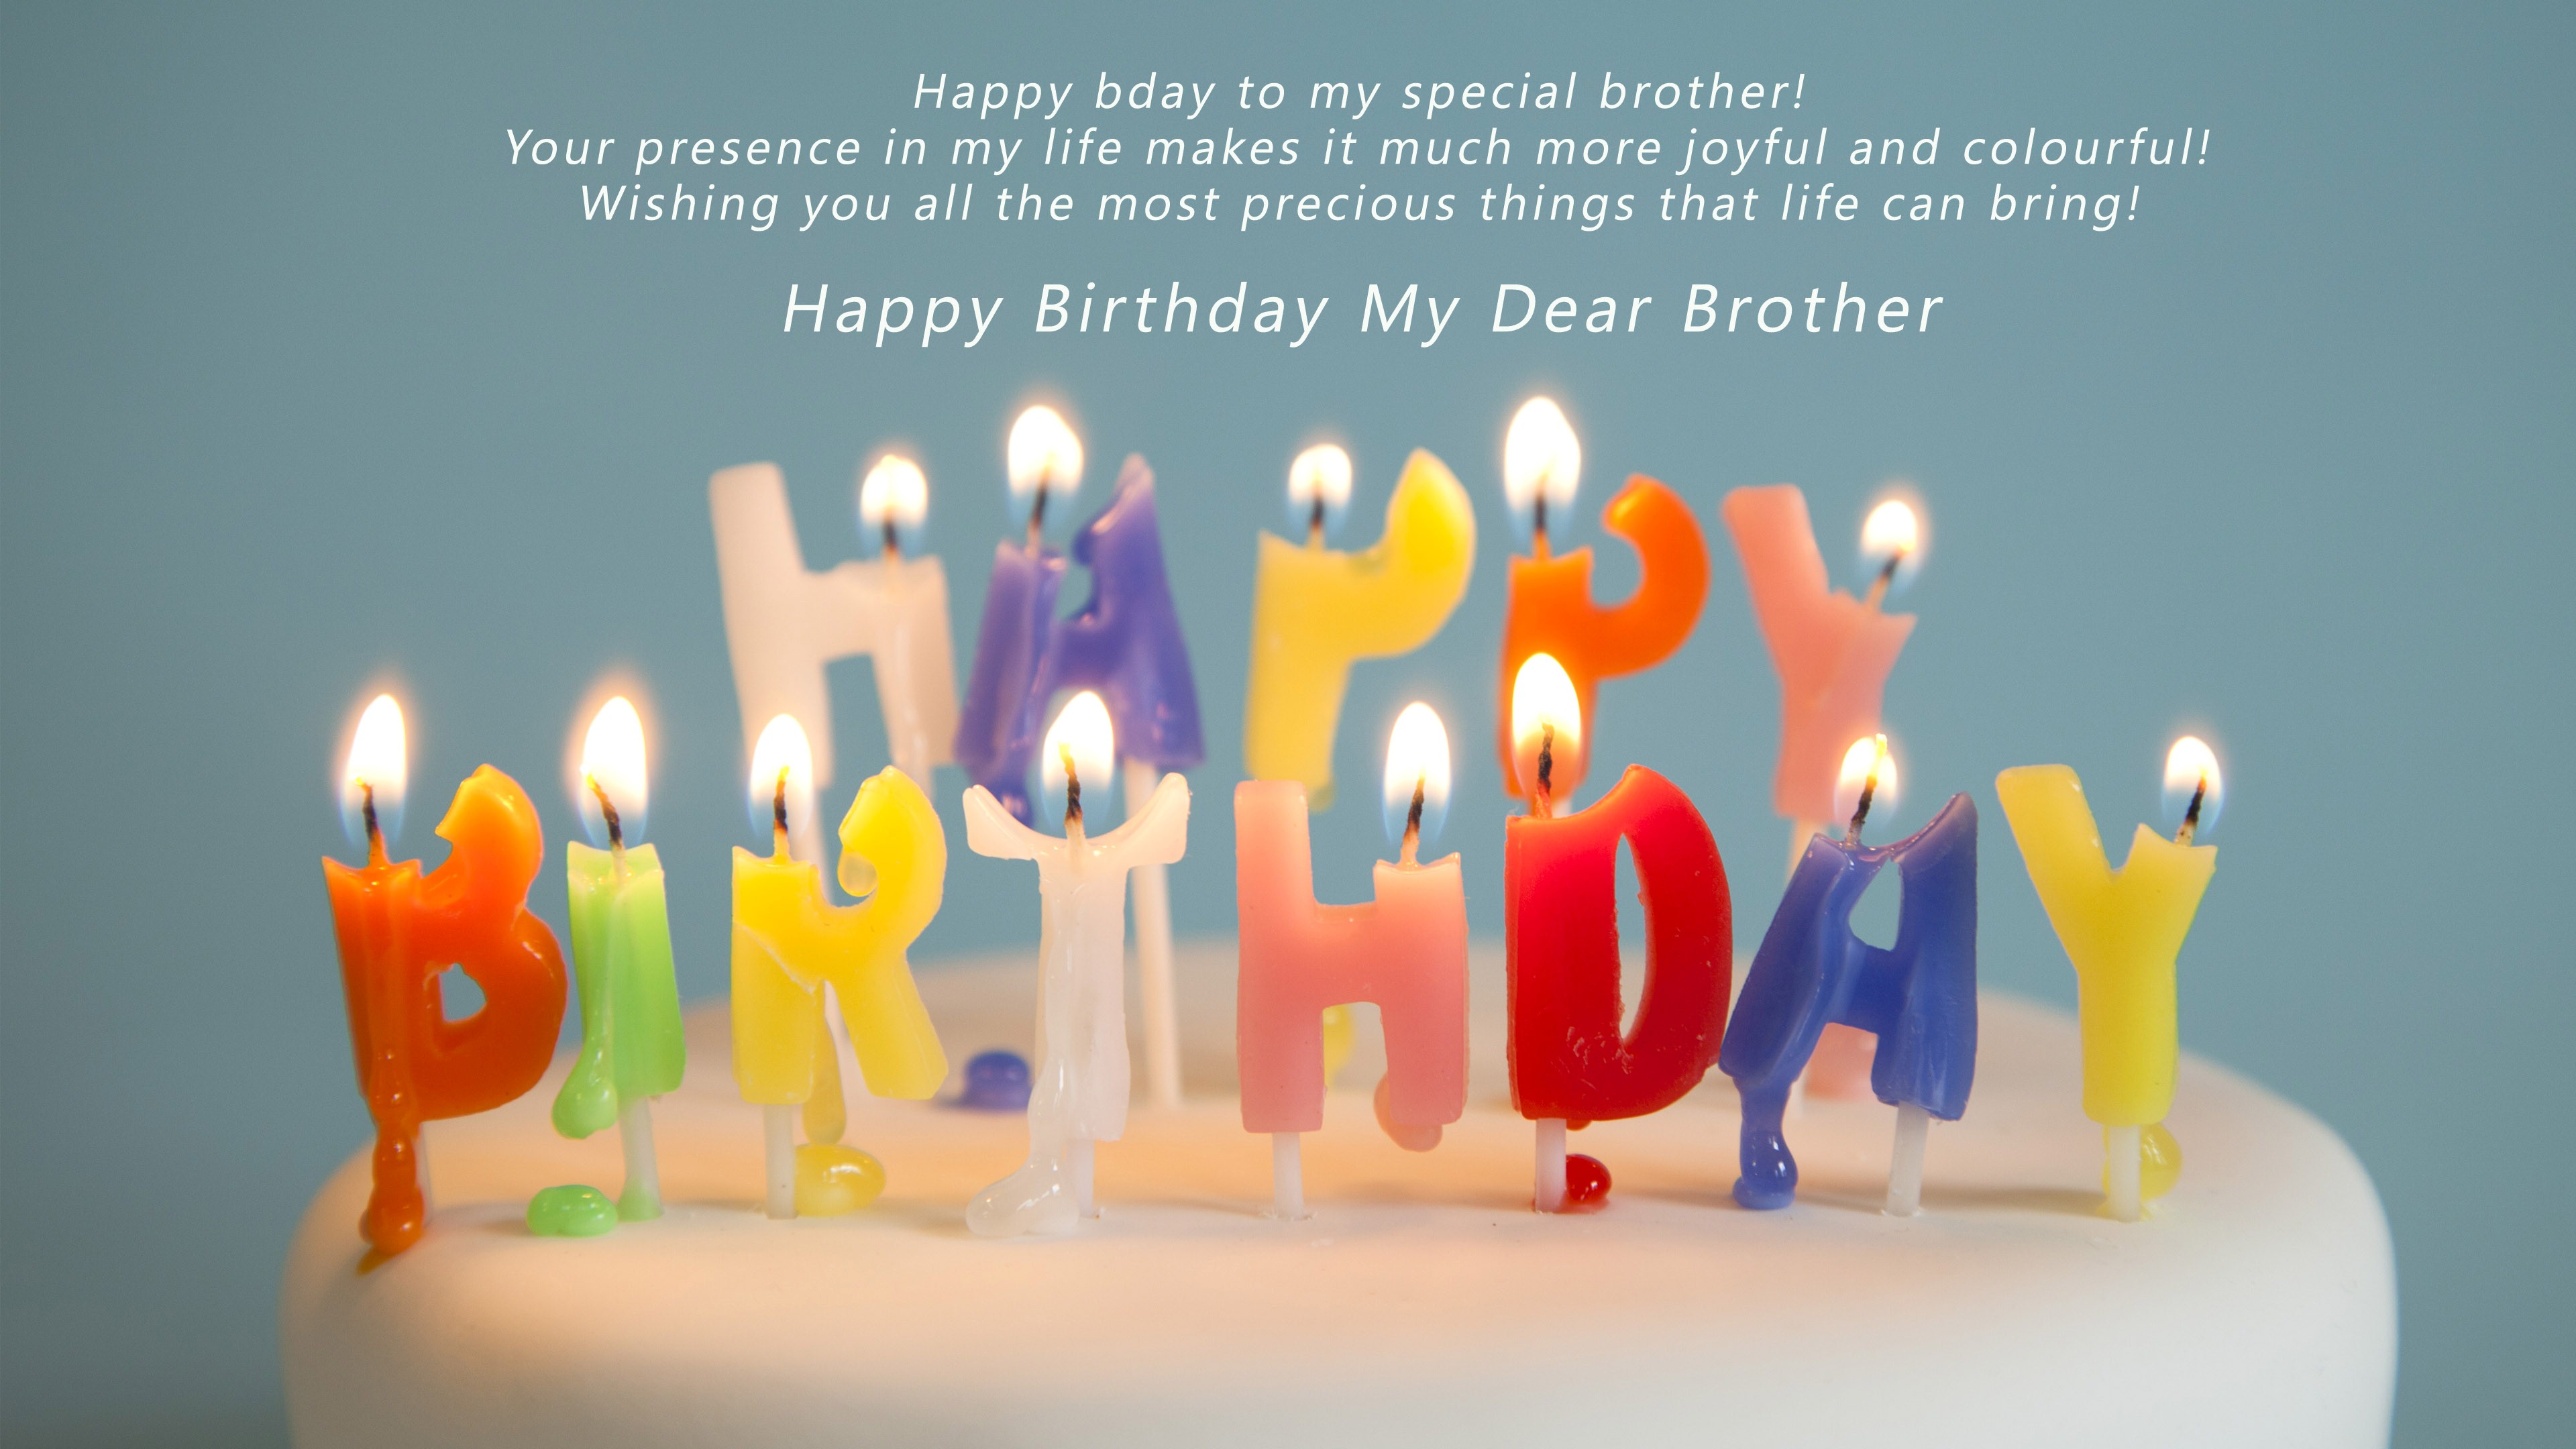 Wish You Happy Birthday My Dear Brother - Happy Birthday In German Song - HD Wallpaper 